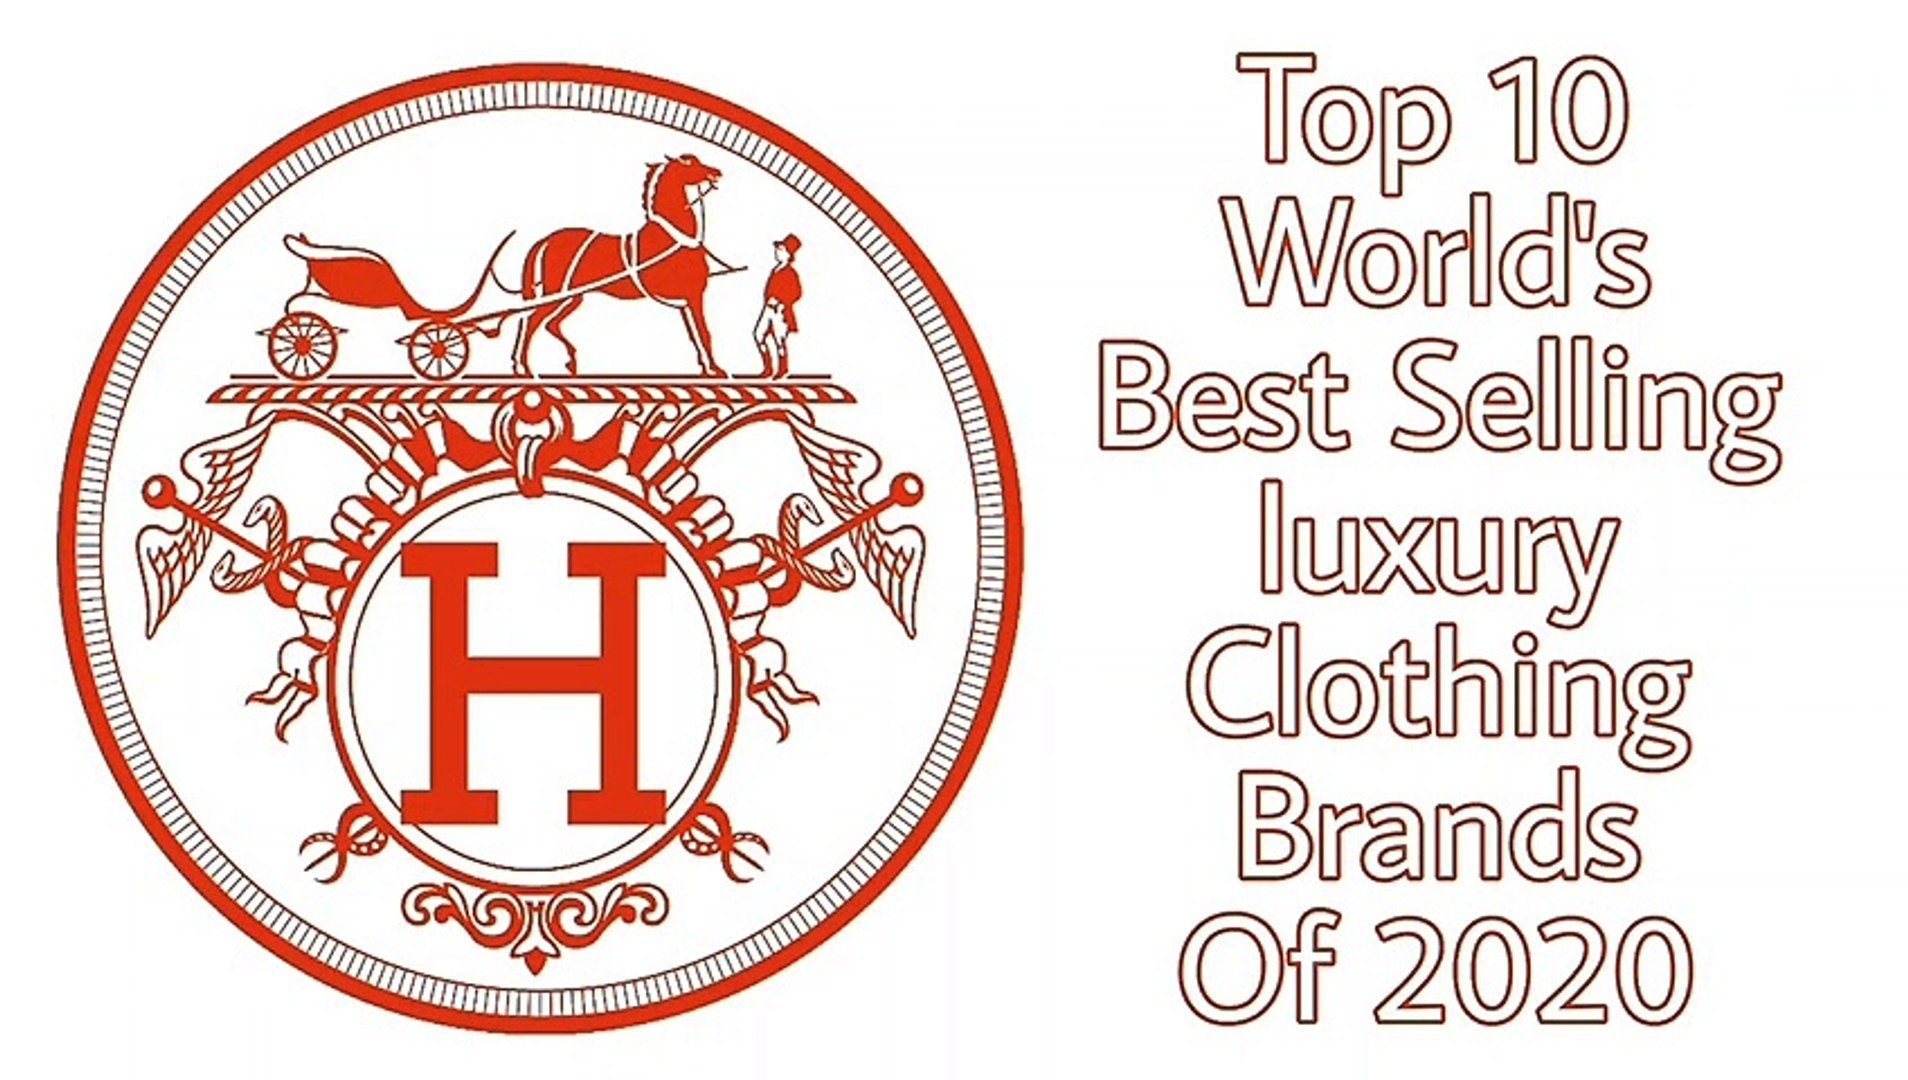 Luxury clothing brands